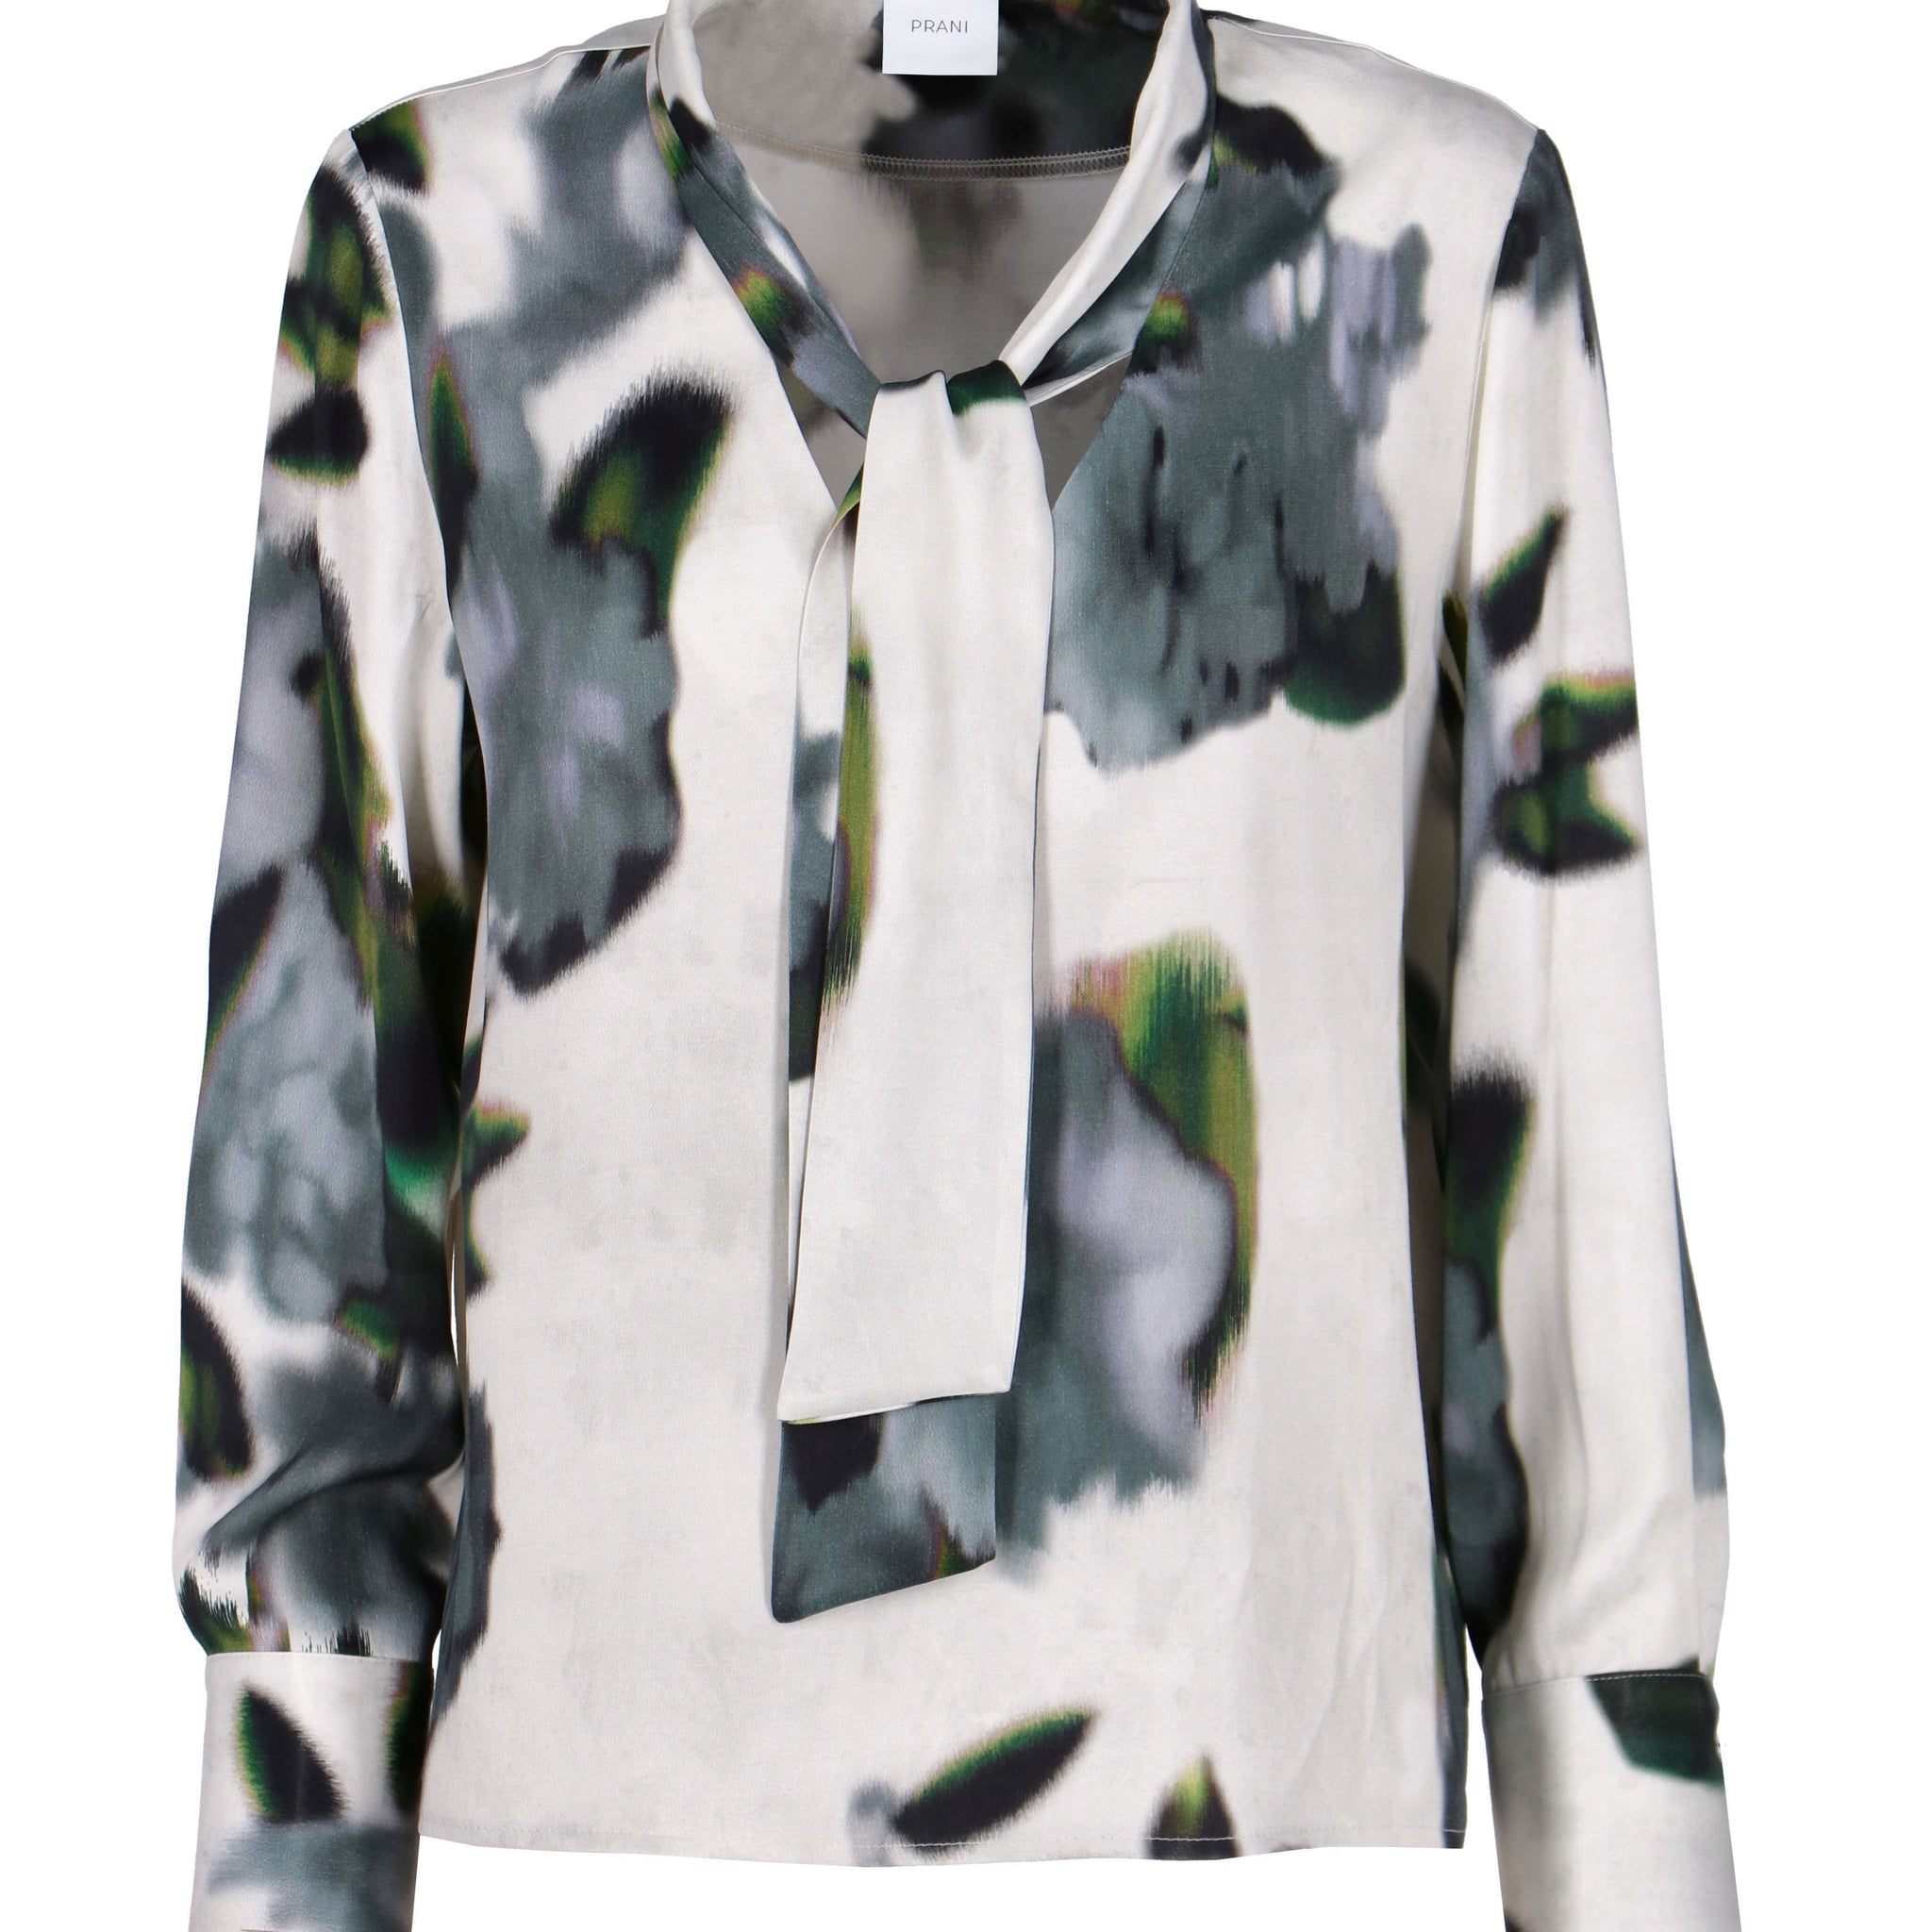 Viscose blouse 3.24 - PRANI